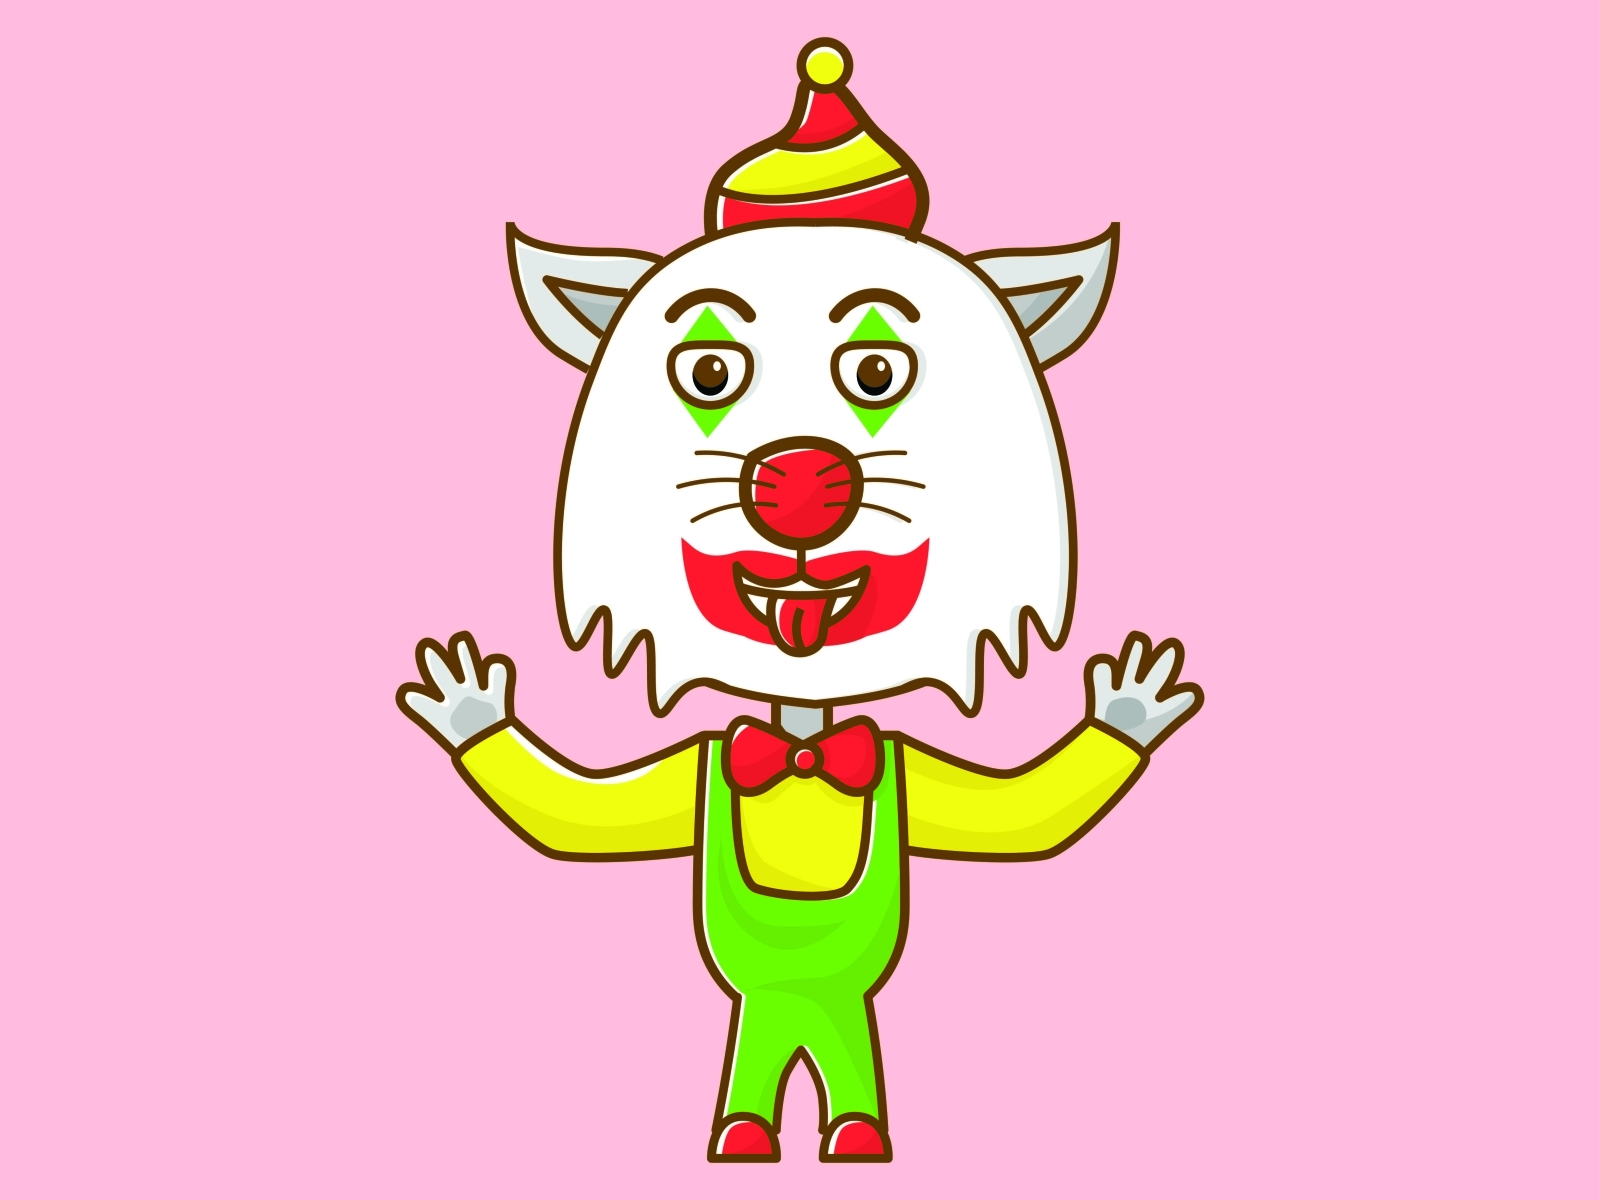 cat clown by tatak on Dribbble